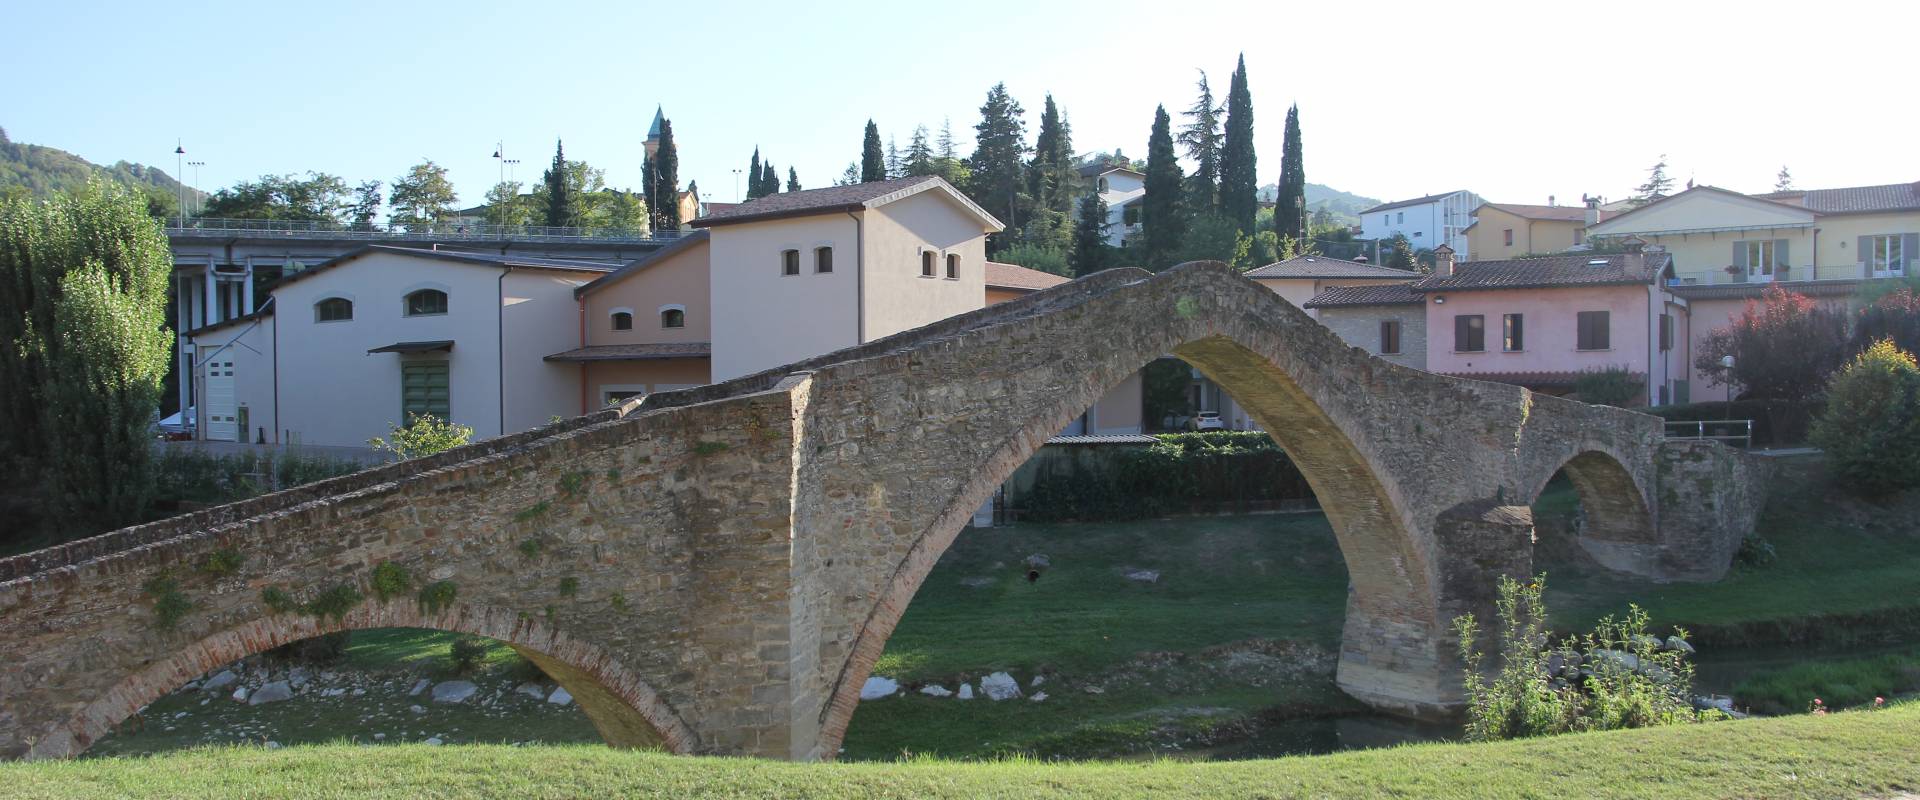 Modigliana, ponte di San Donato (10) foto di Gianni Careddu